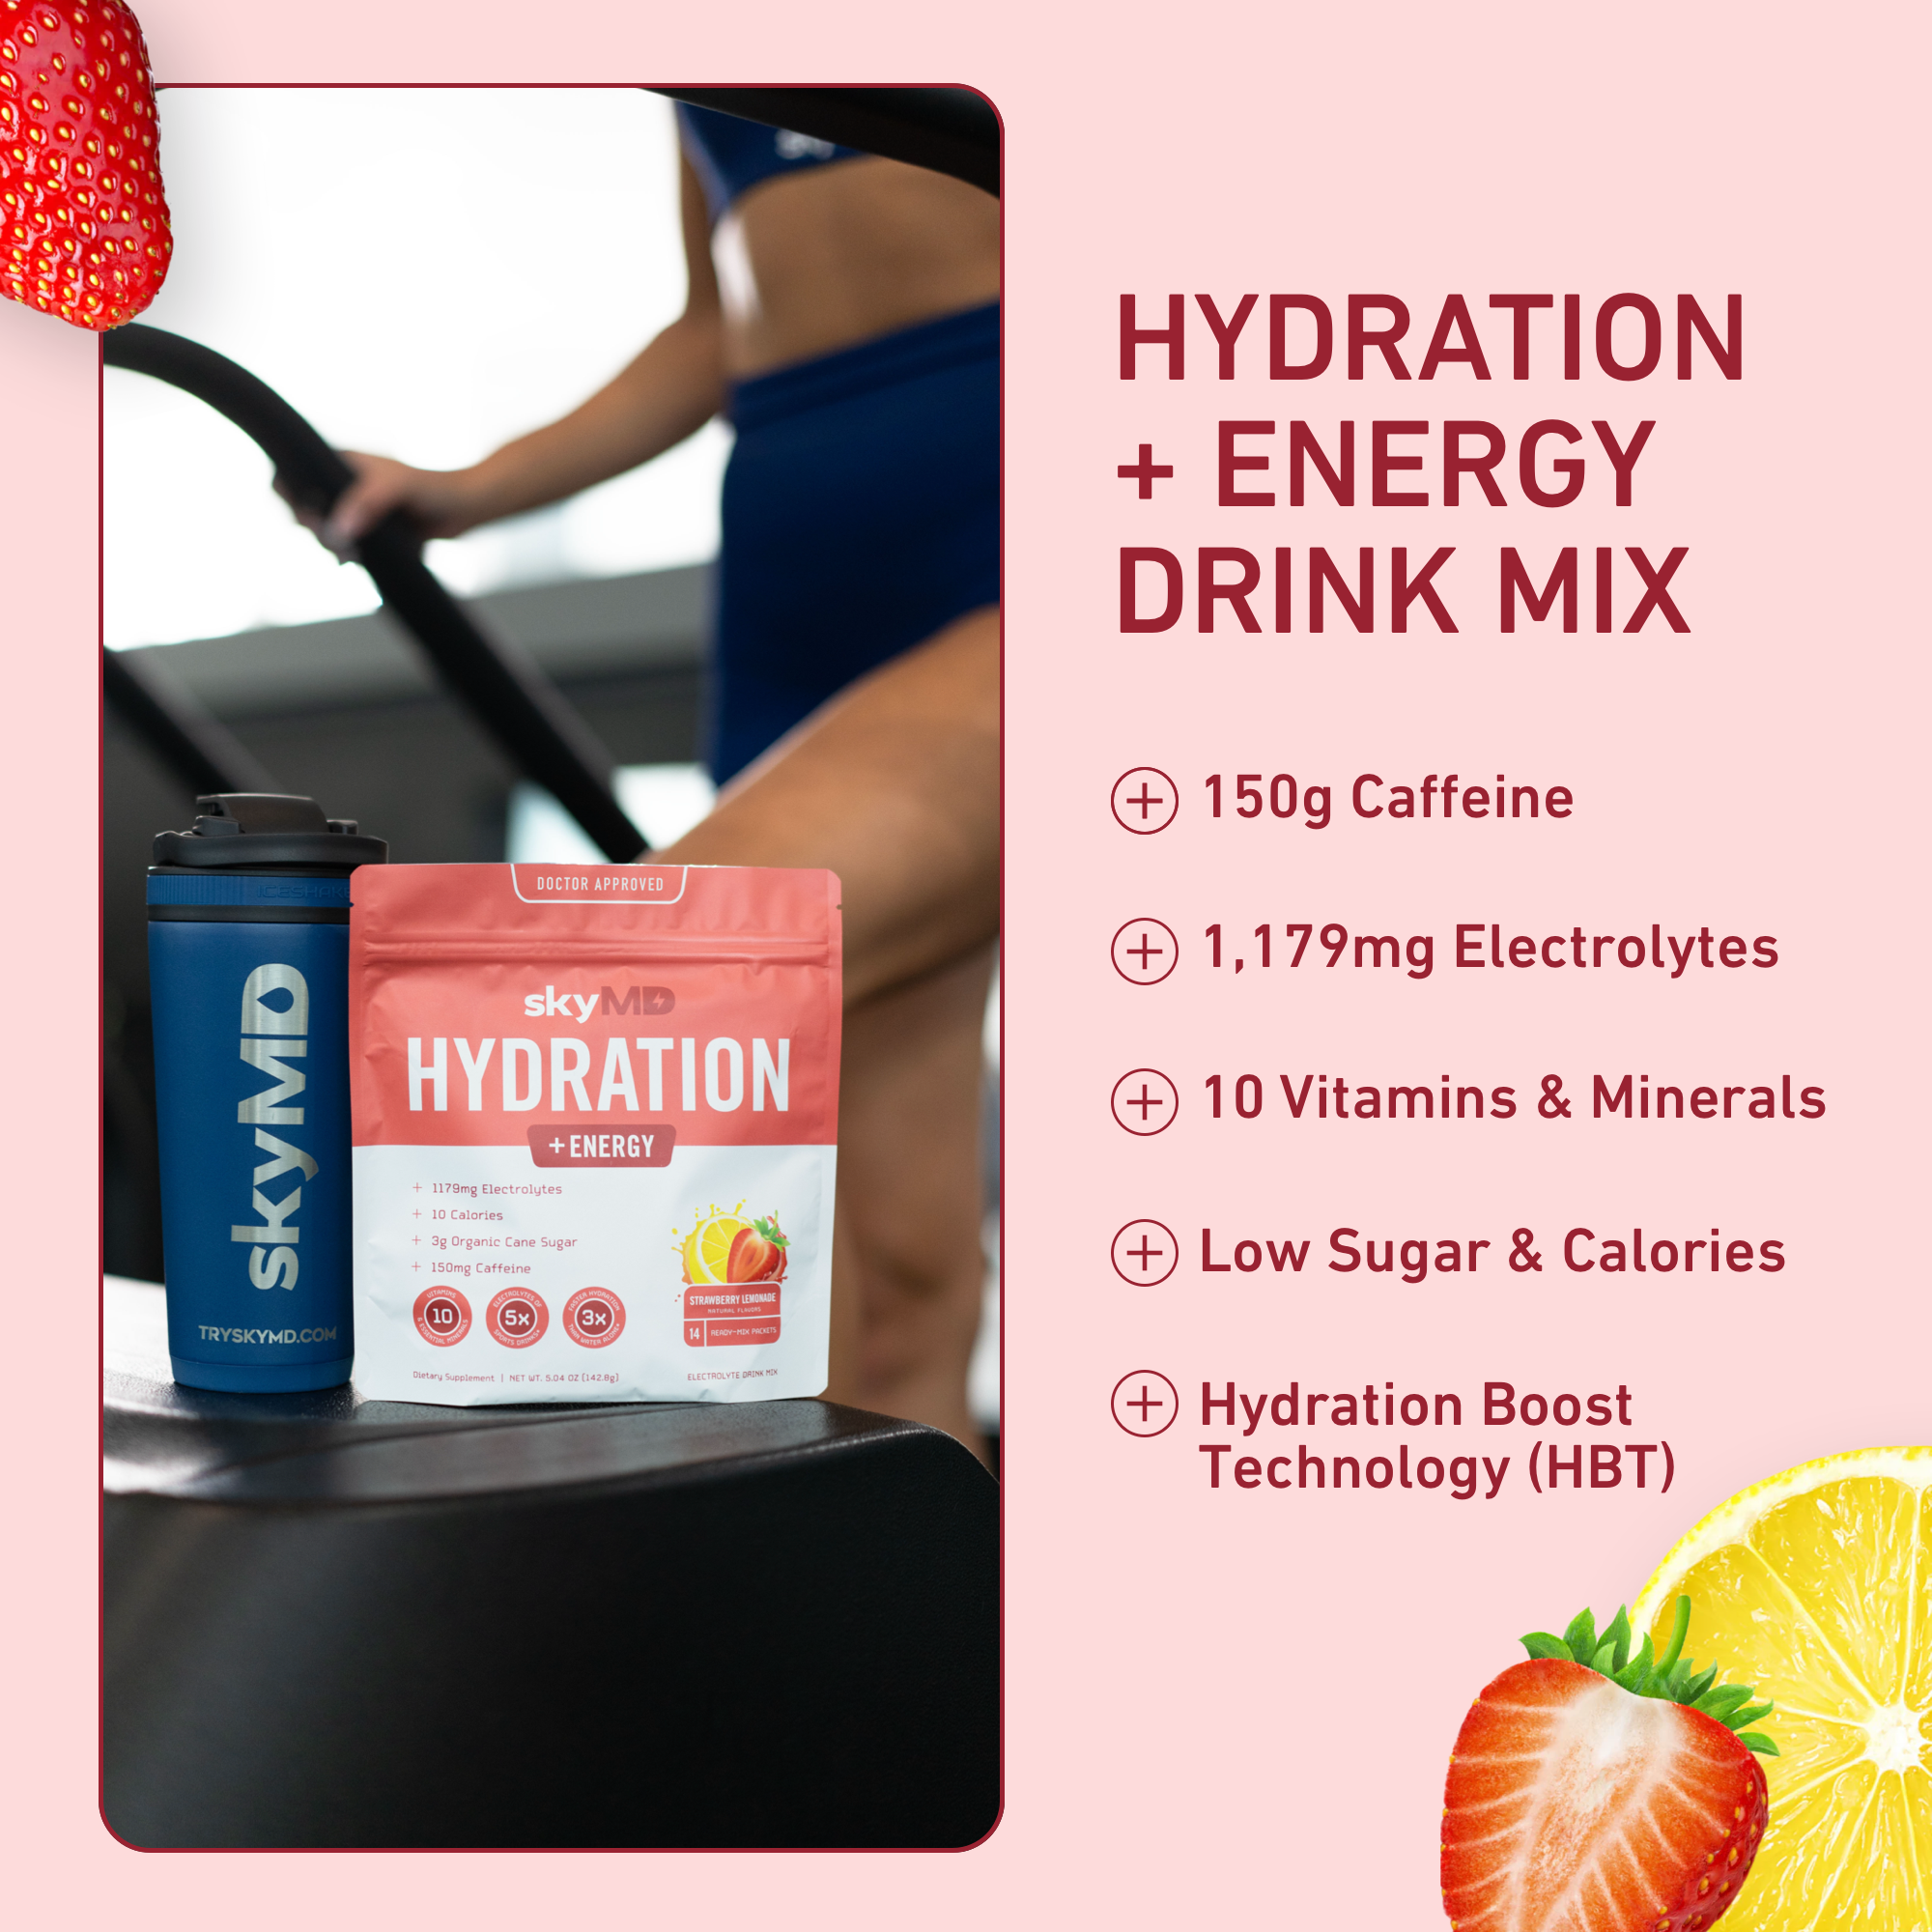 Hydration + Energy